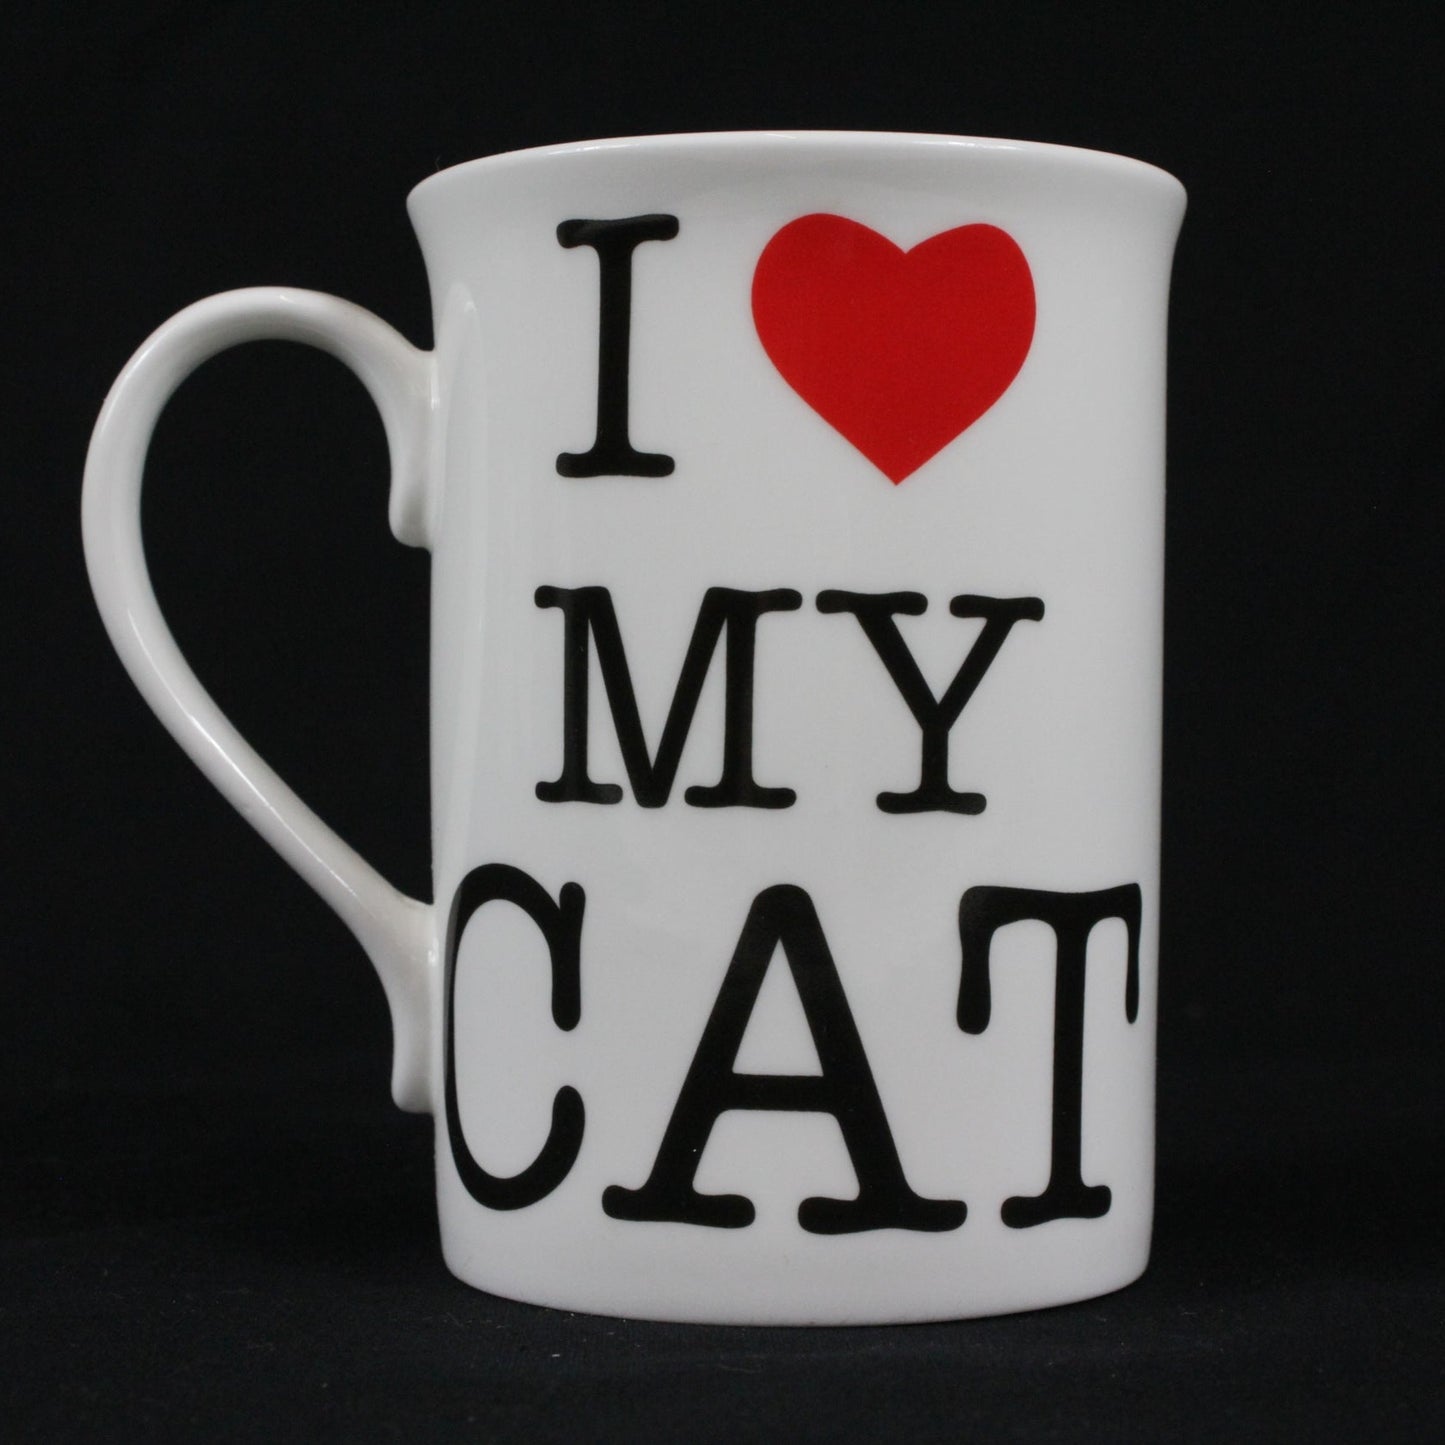 "I Love/Heart My Cat" Mug